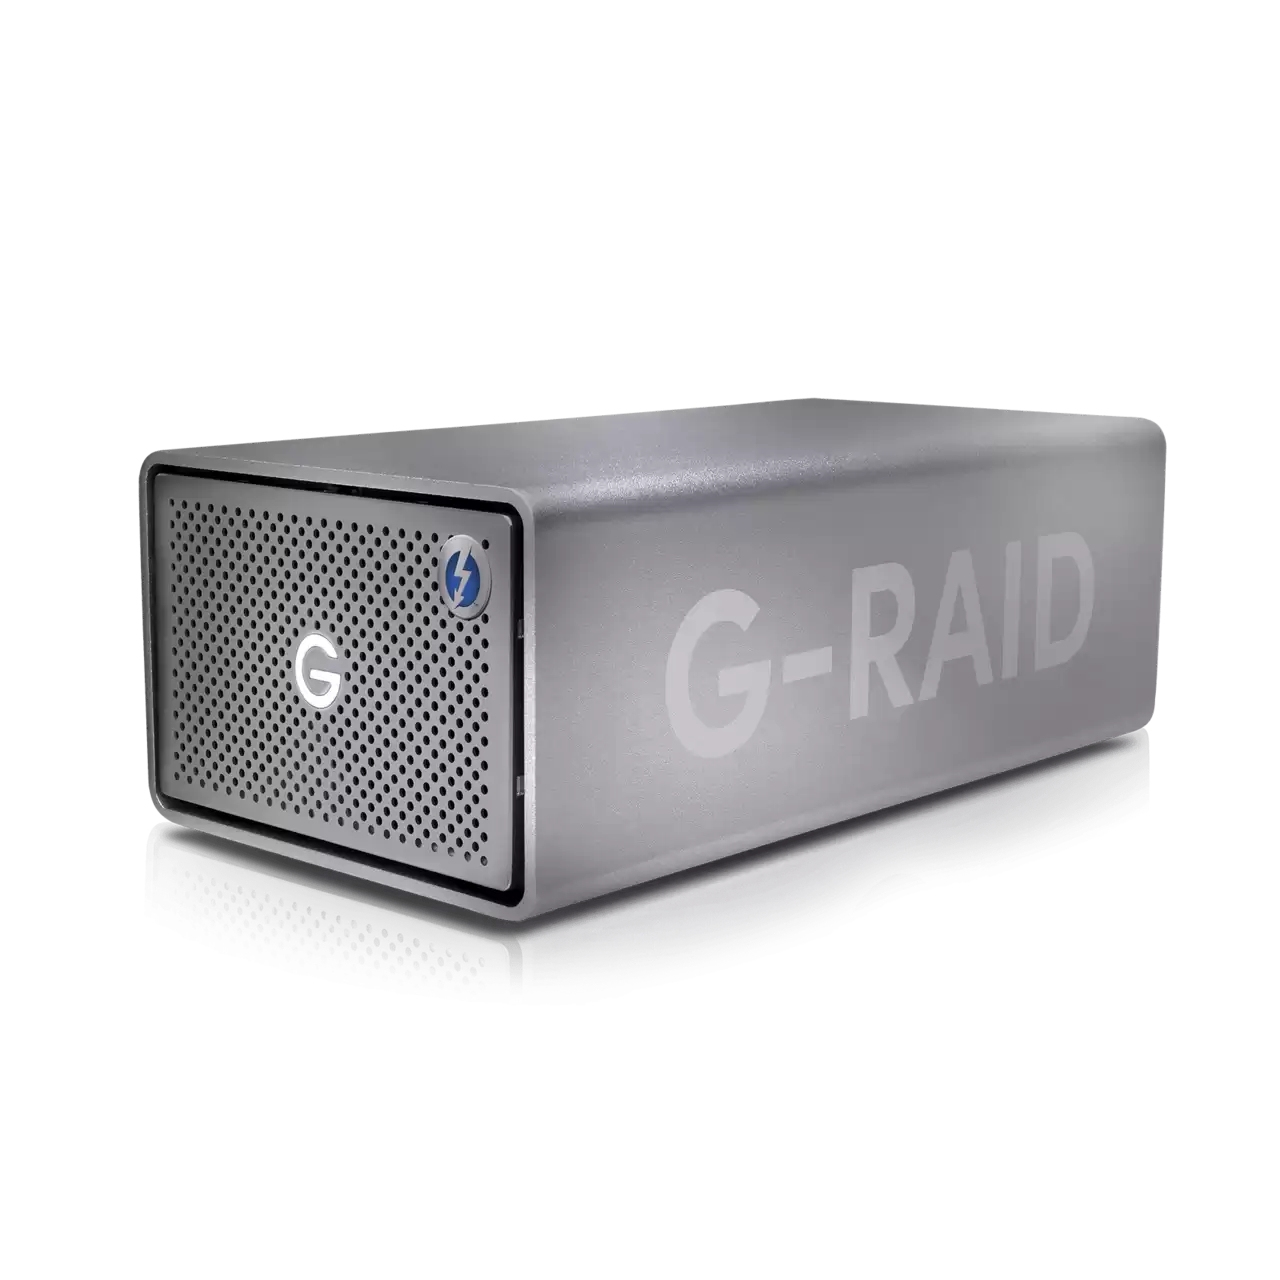  Professional G-RAID 2 36TB 3.5inch Thunderbolt 3 7200RPM USB-C HDMI Port Enterprise-Class 2-Bay Desktop Drive - Space Grey